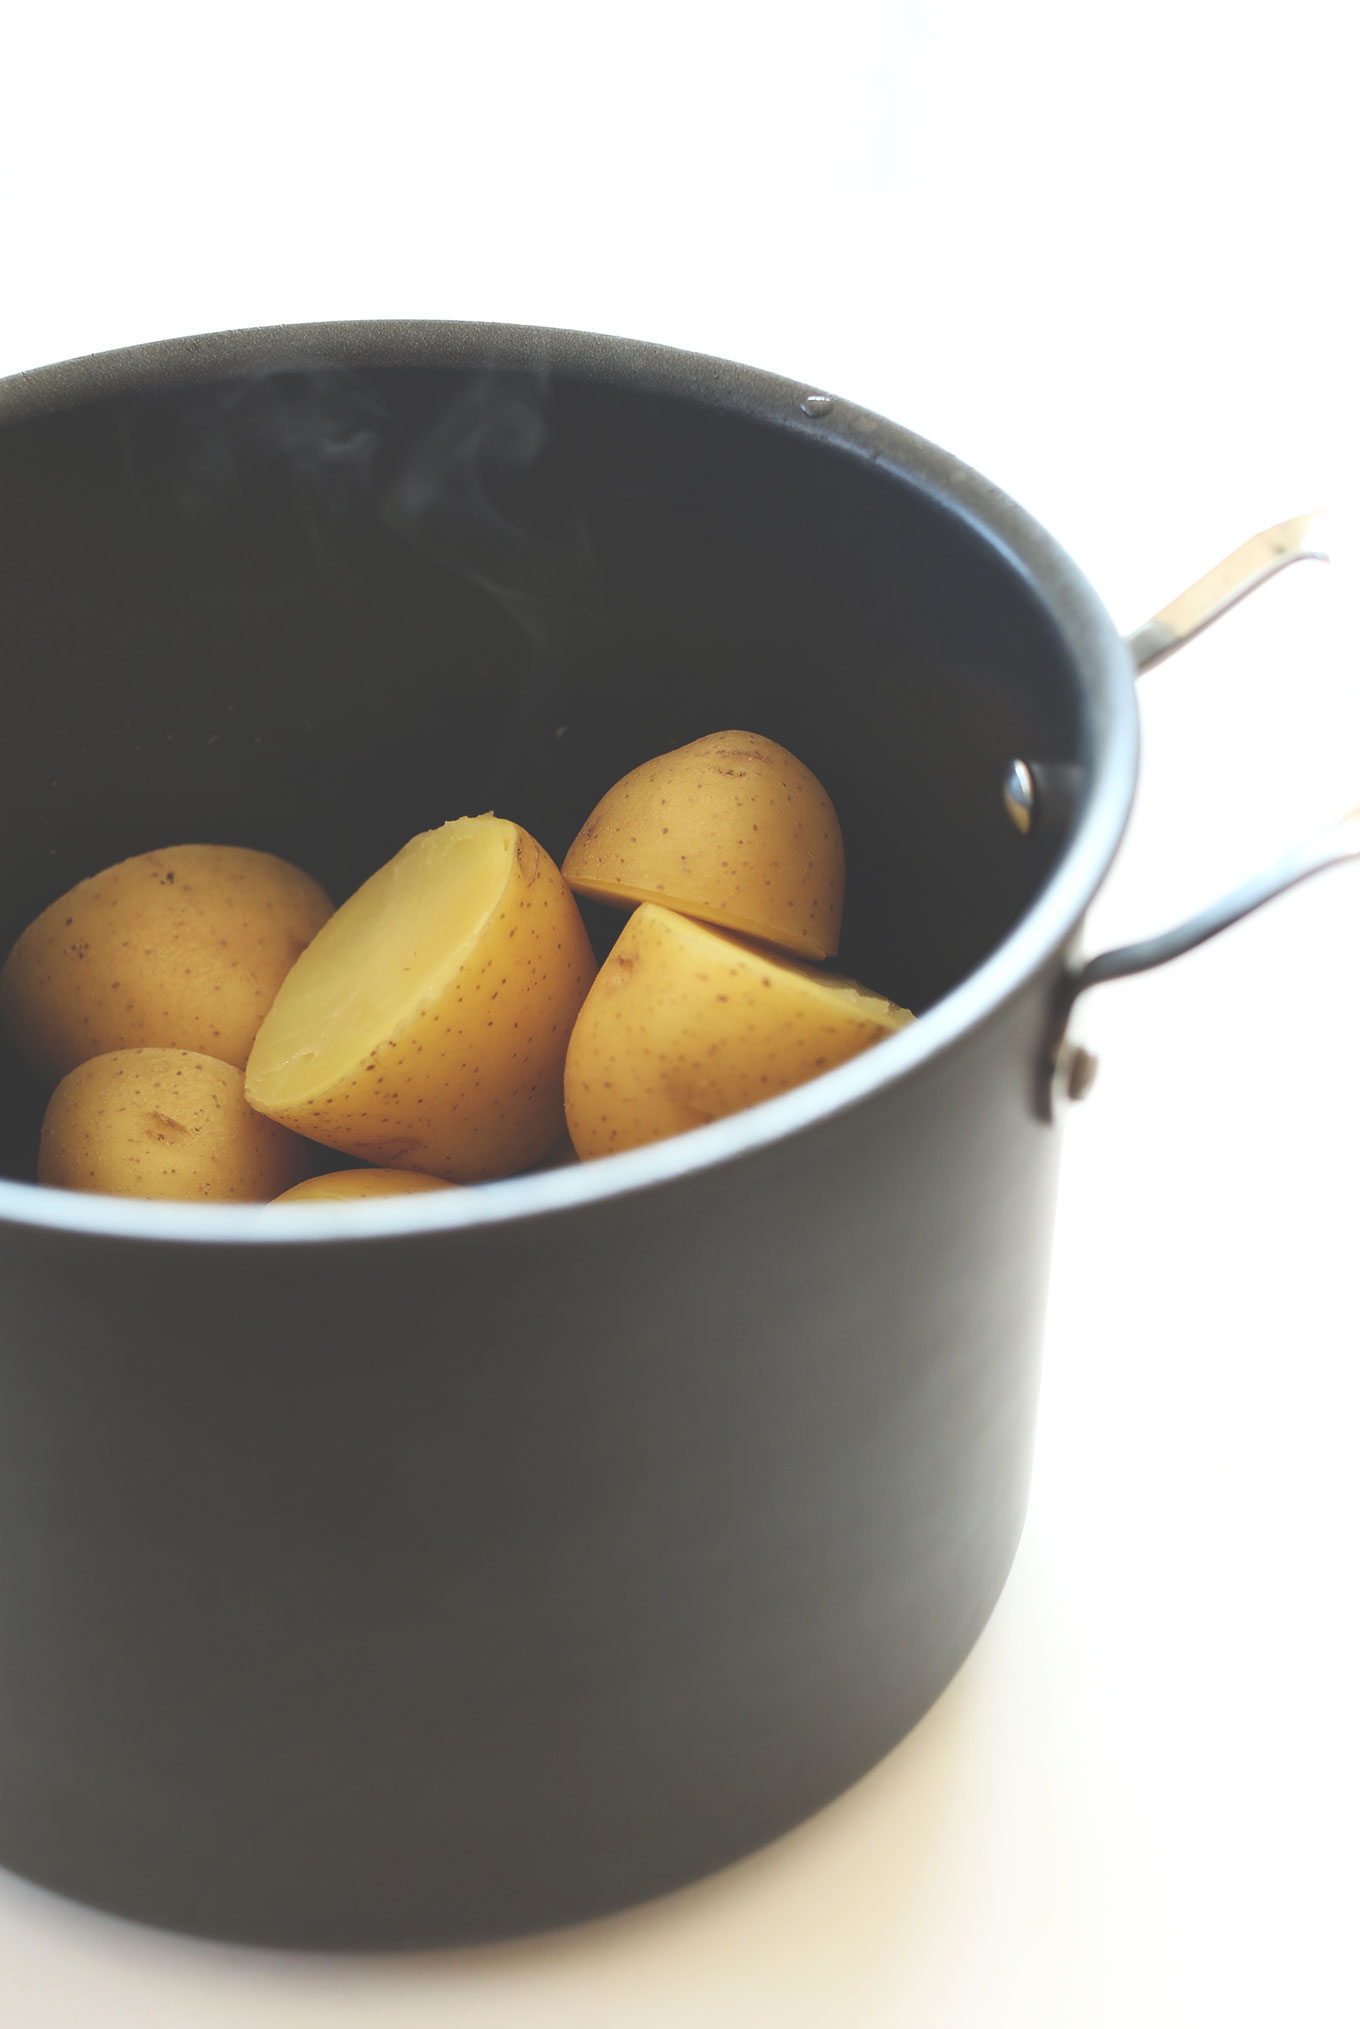 Cooking potatoes for simple Vegan Shepherds Pie